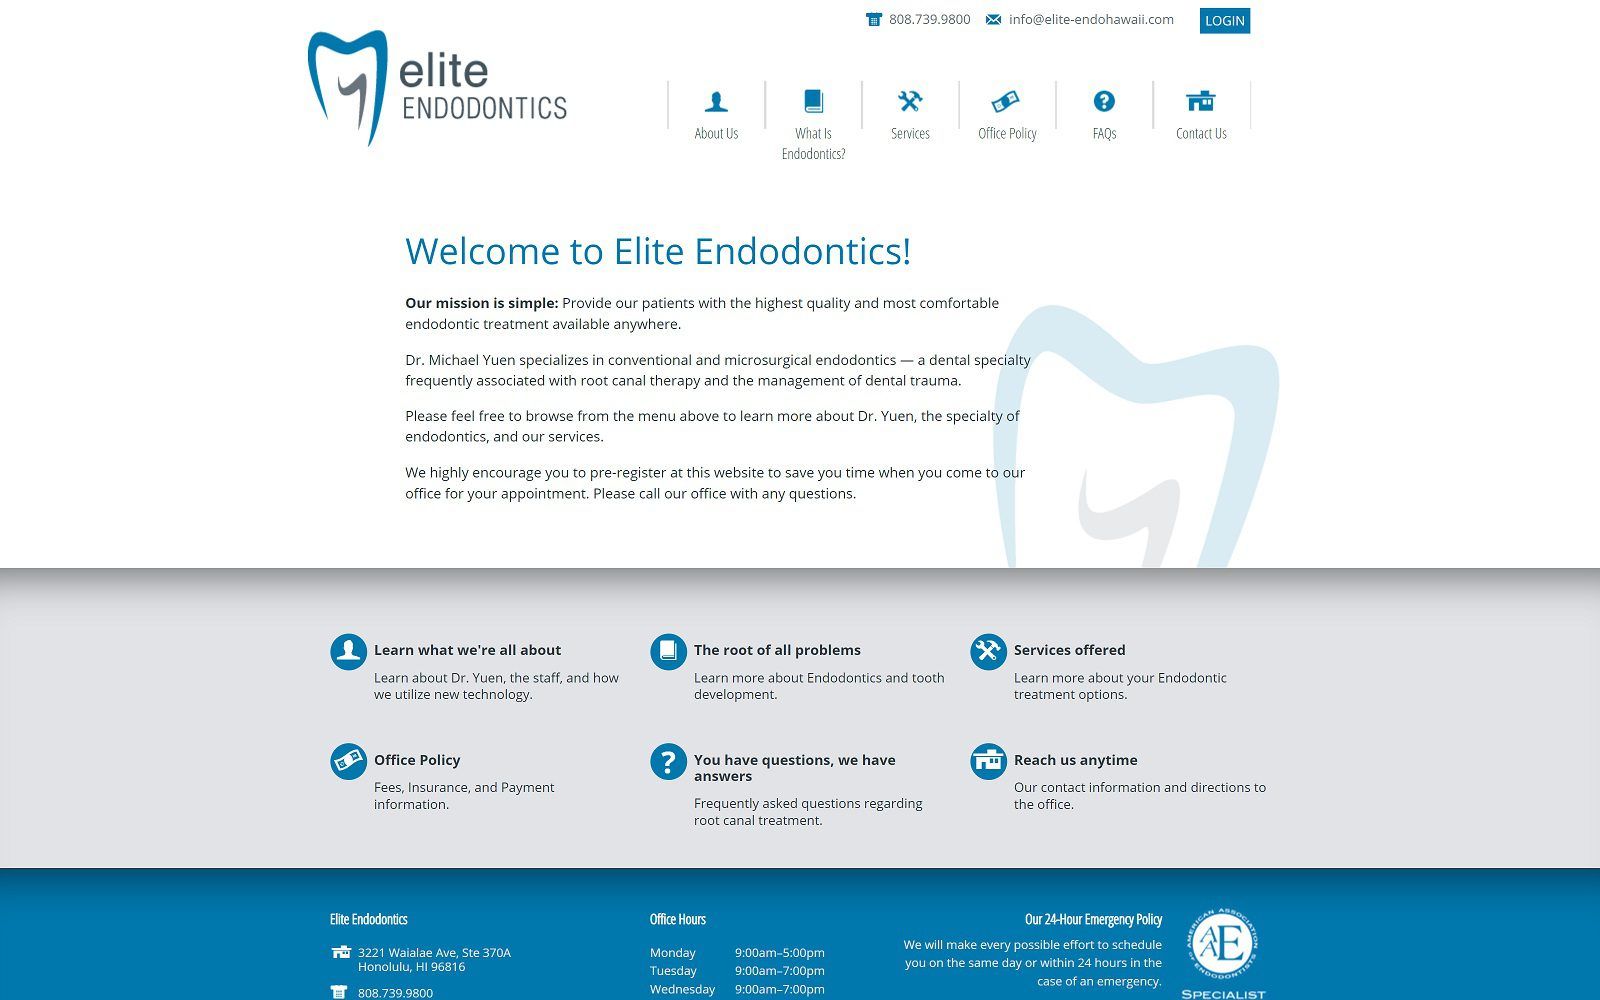 The screenshot of elite endodontics dr. Michael yuen website